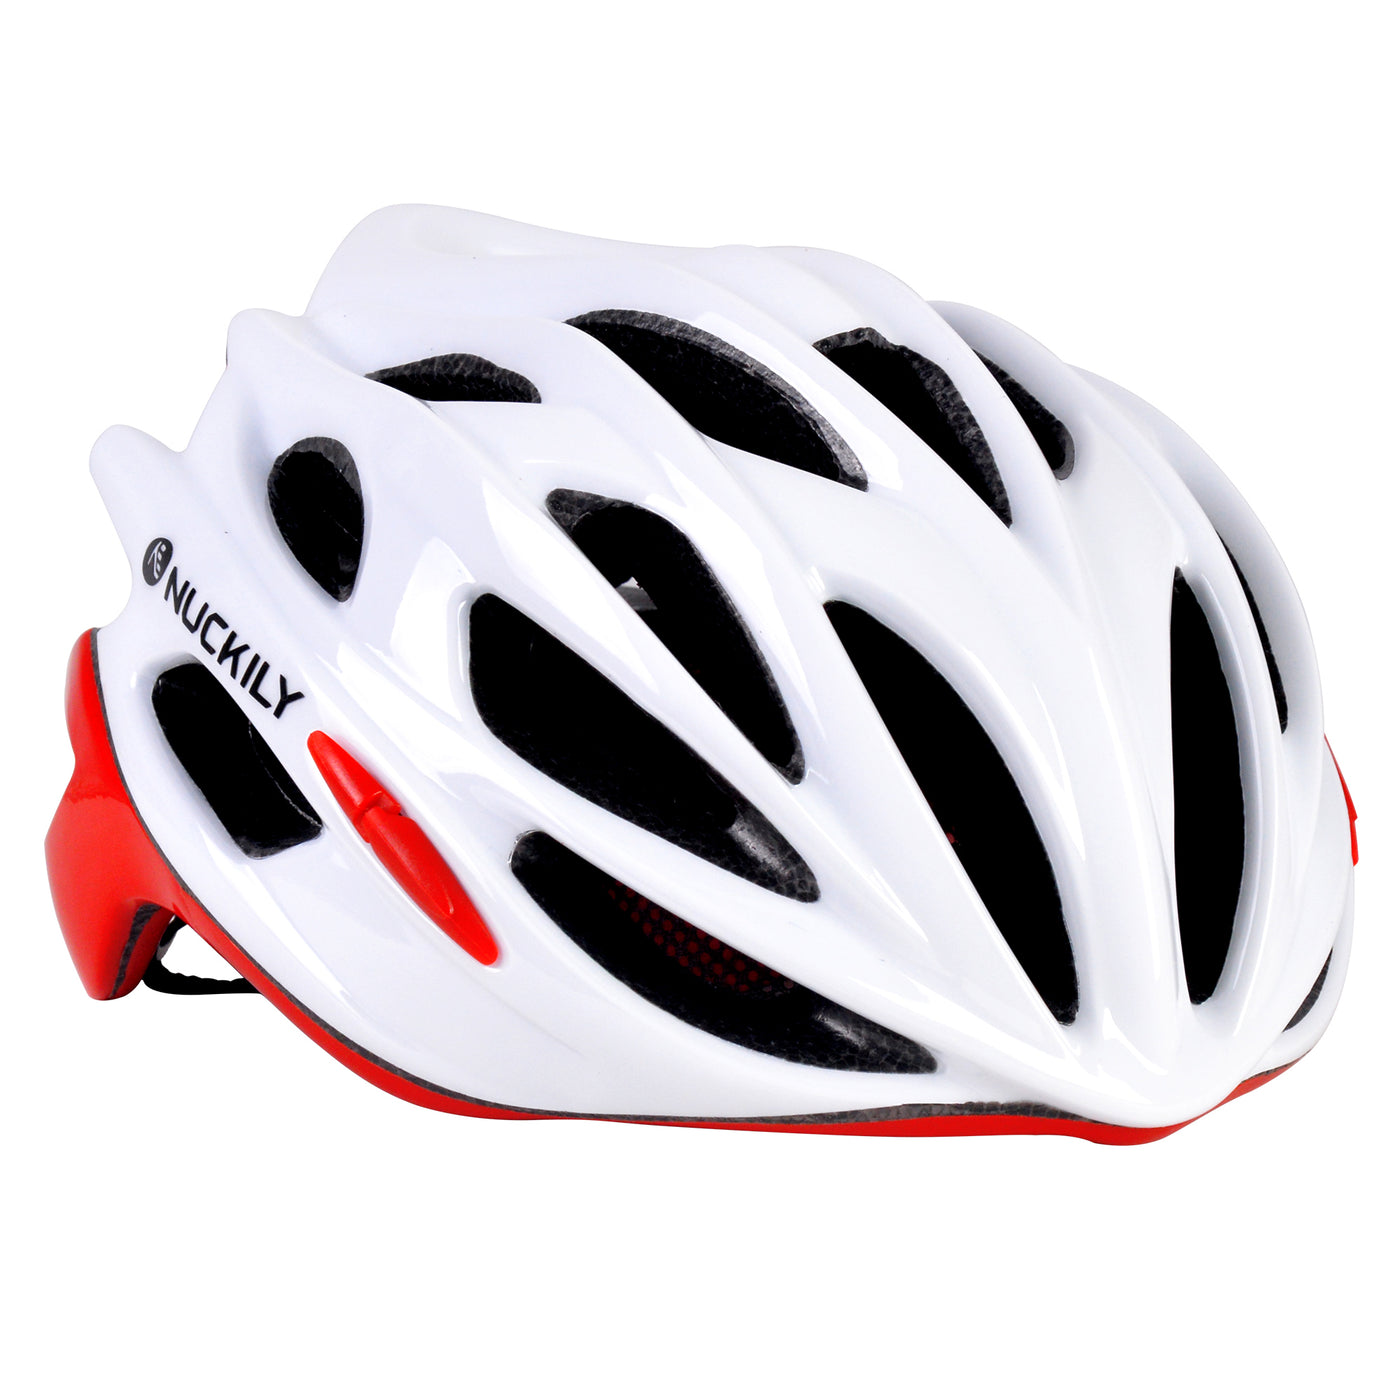 Nuckily PB13 Mens Road Cycling Helmet - Cyclop.in